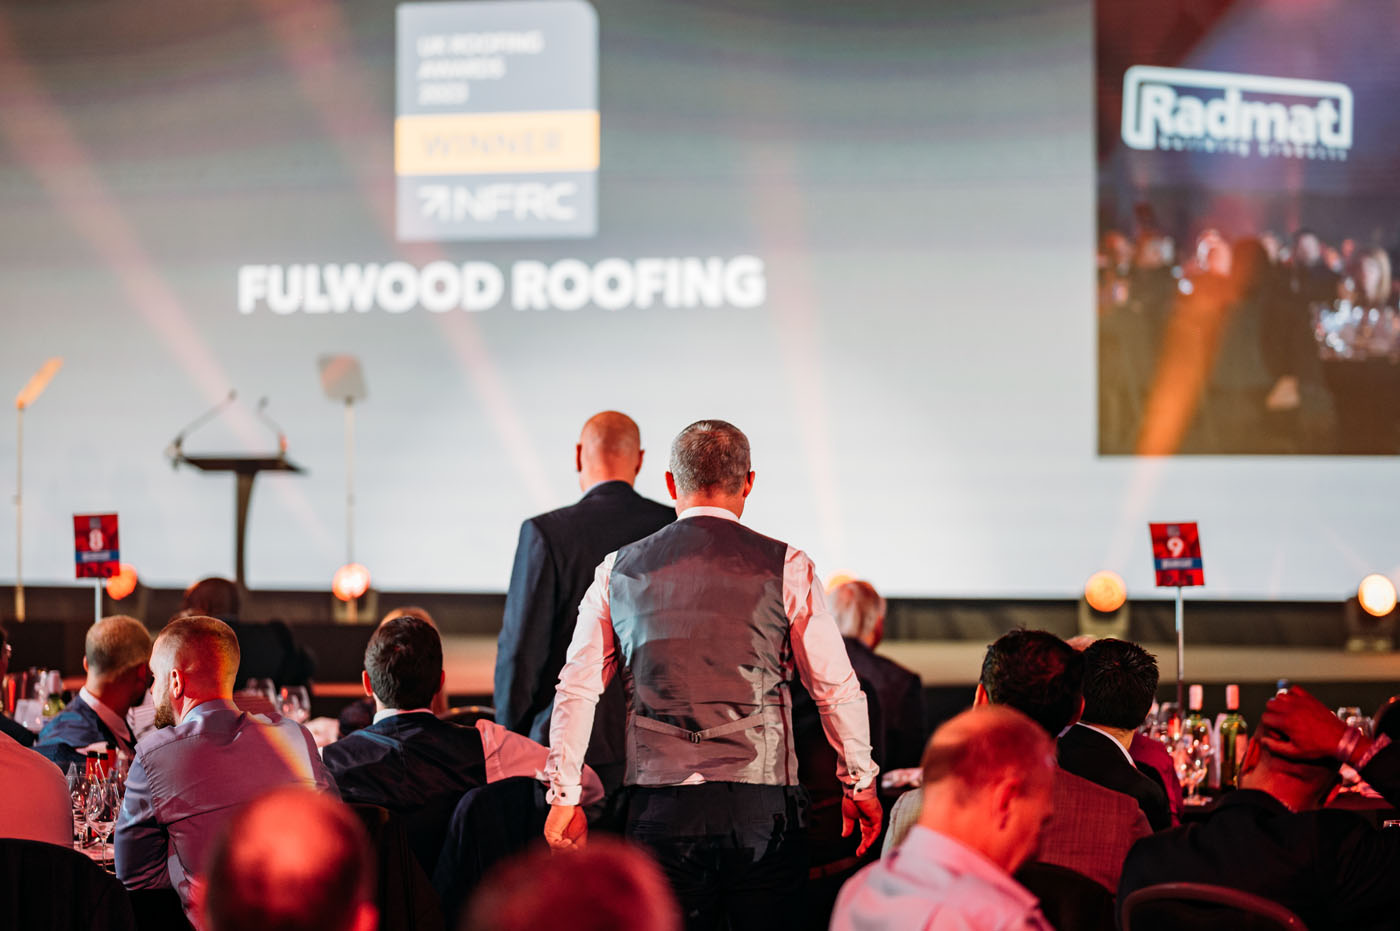 Industry Choice winner Fulwood Roofing